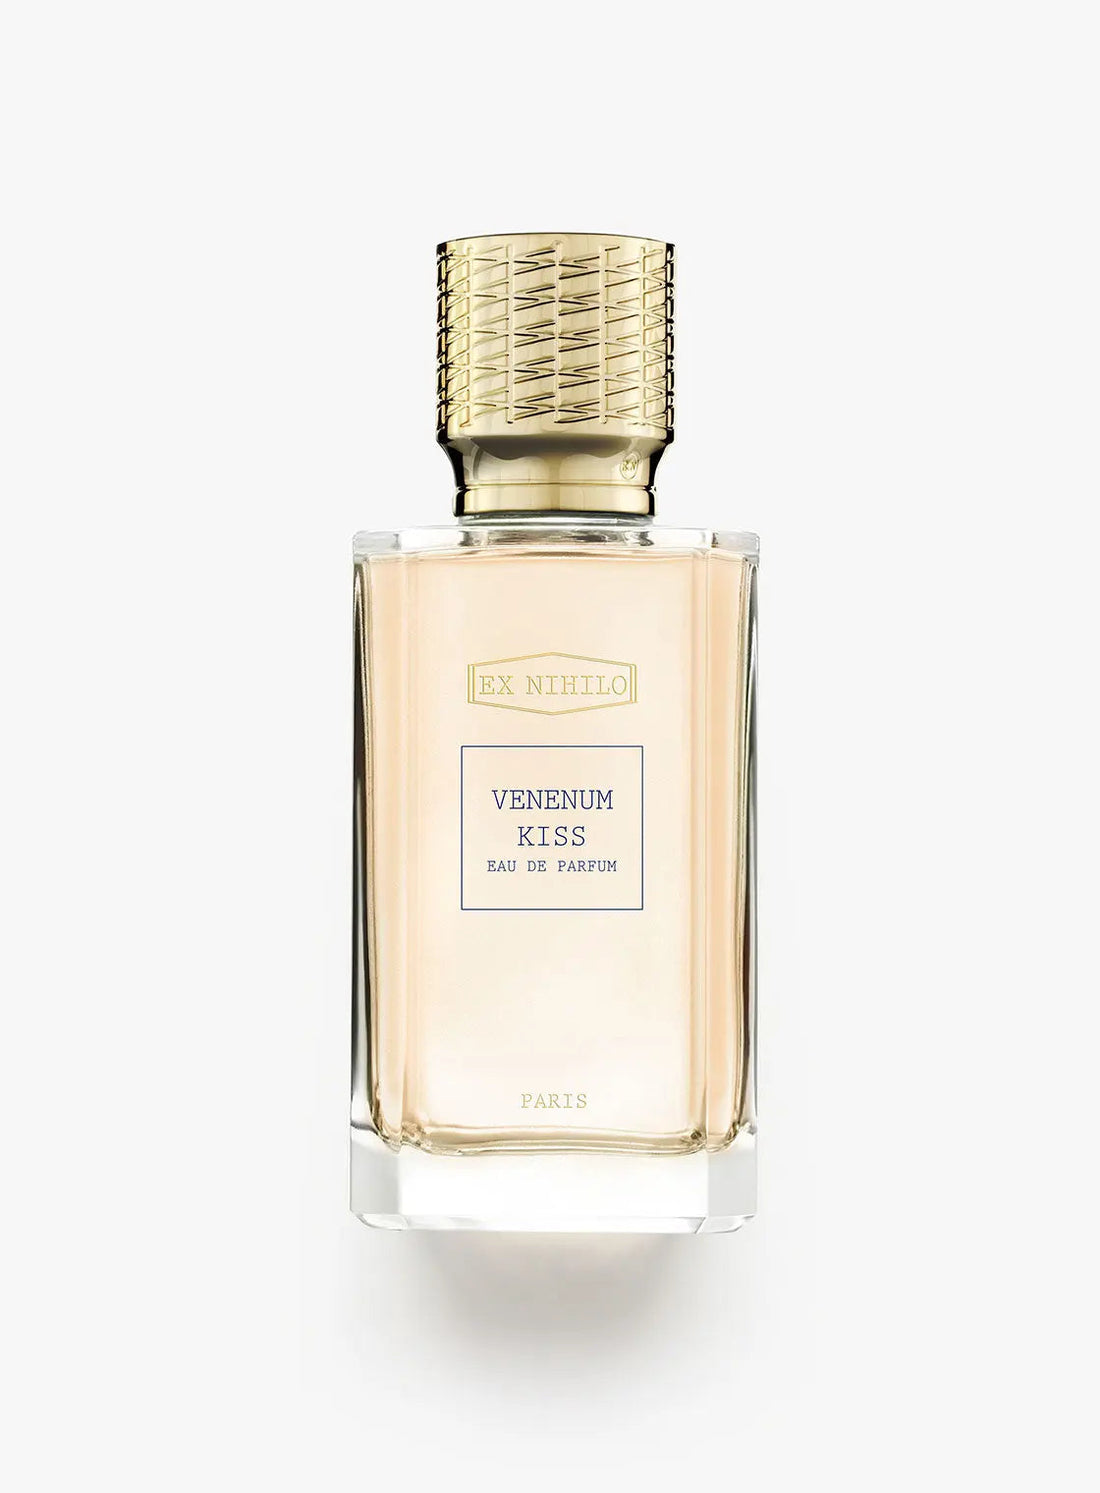 Ex nihilo Venenum Kiss eau de parfum - 50 ml